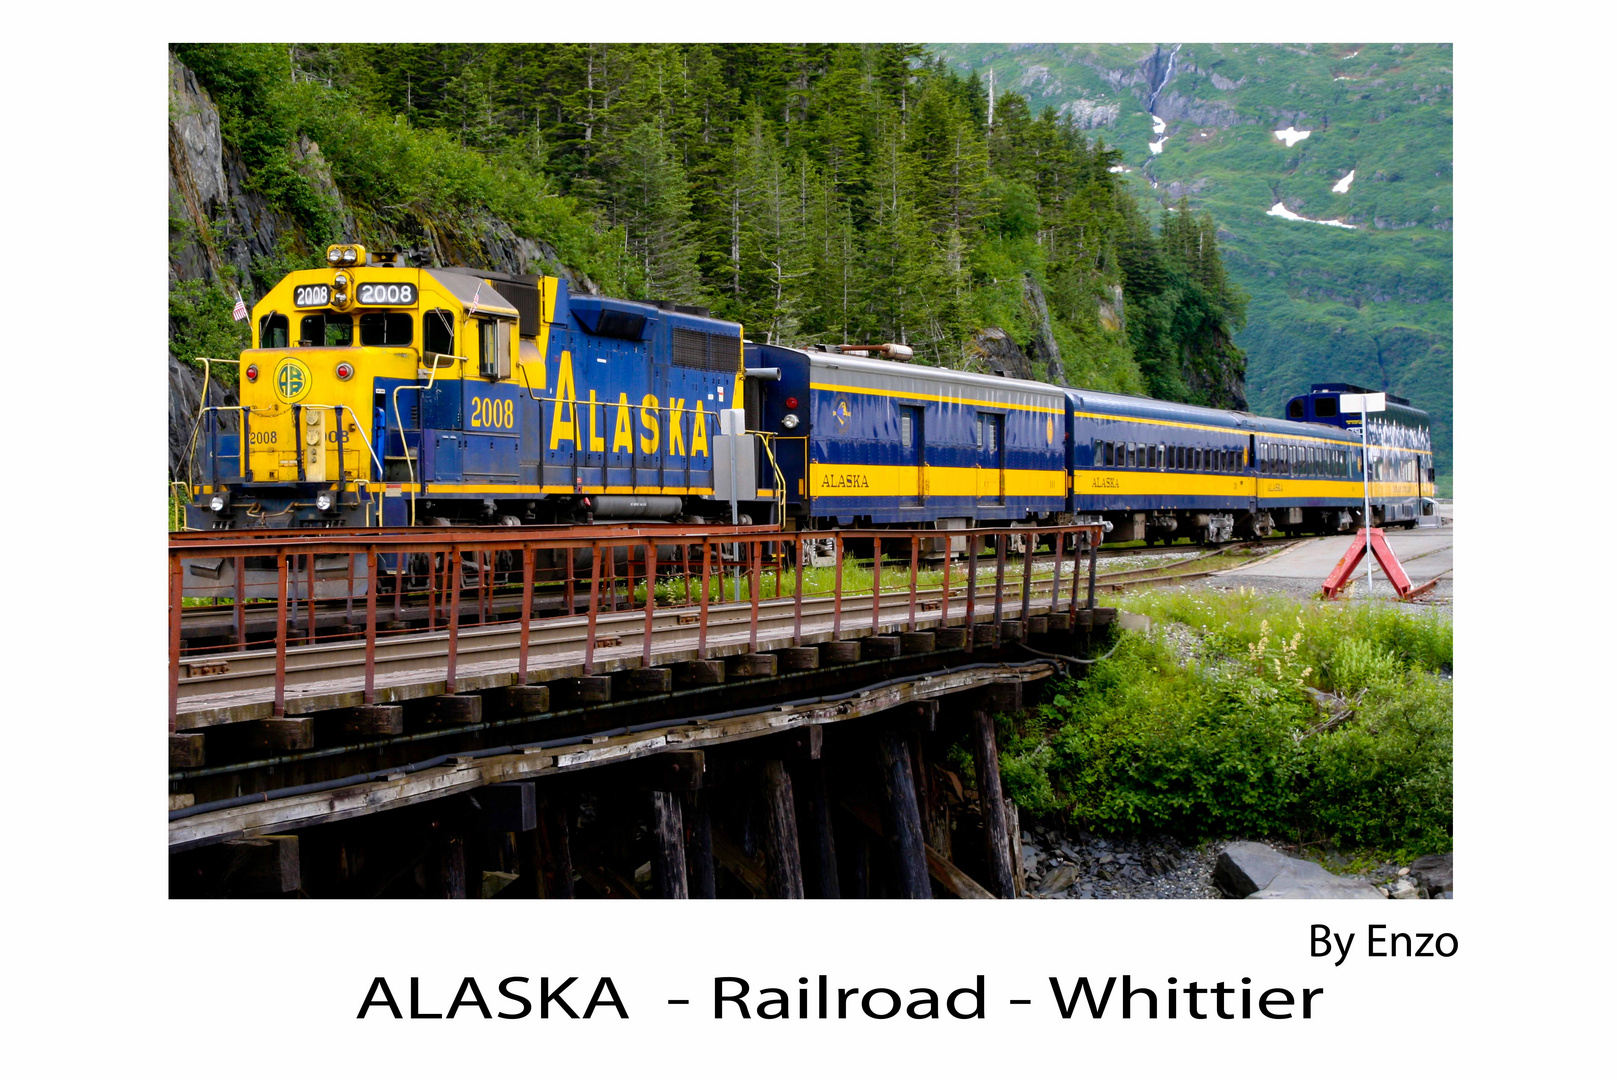 Alaska - Railroad - Whittier